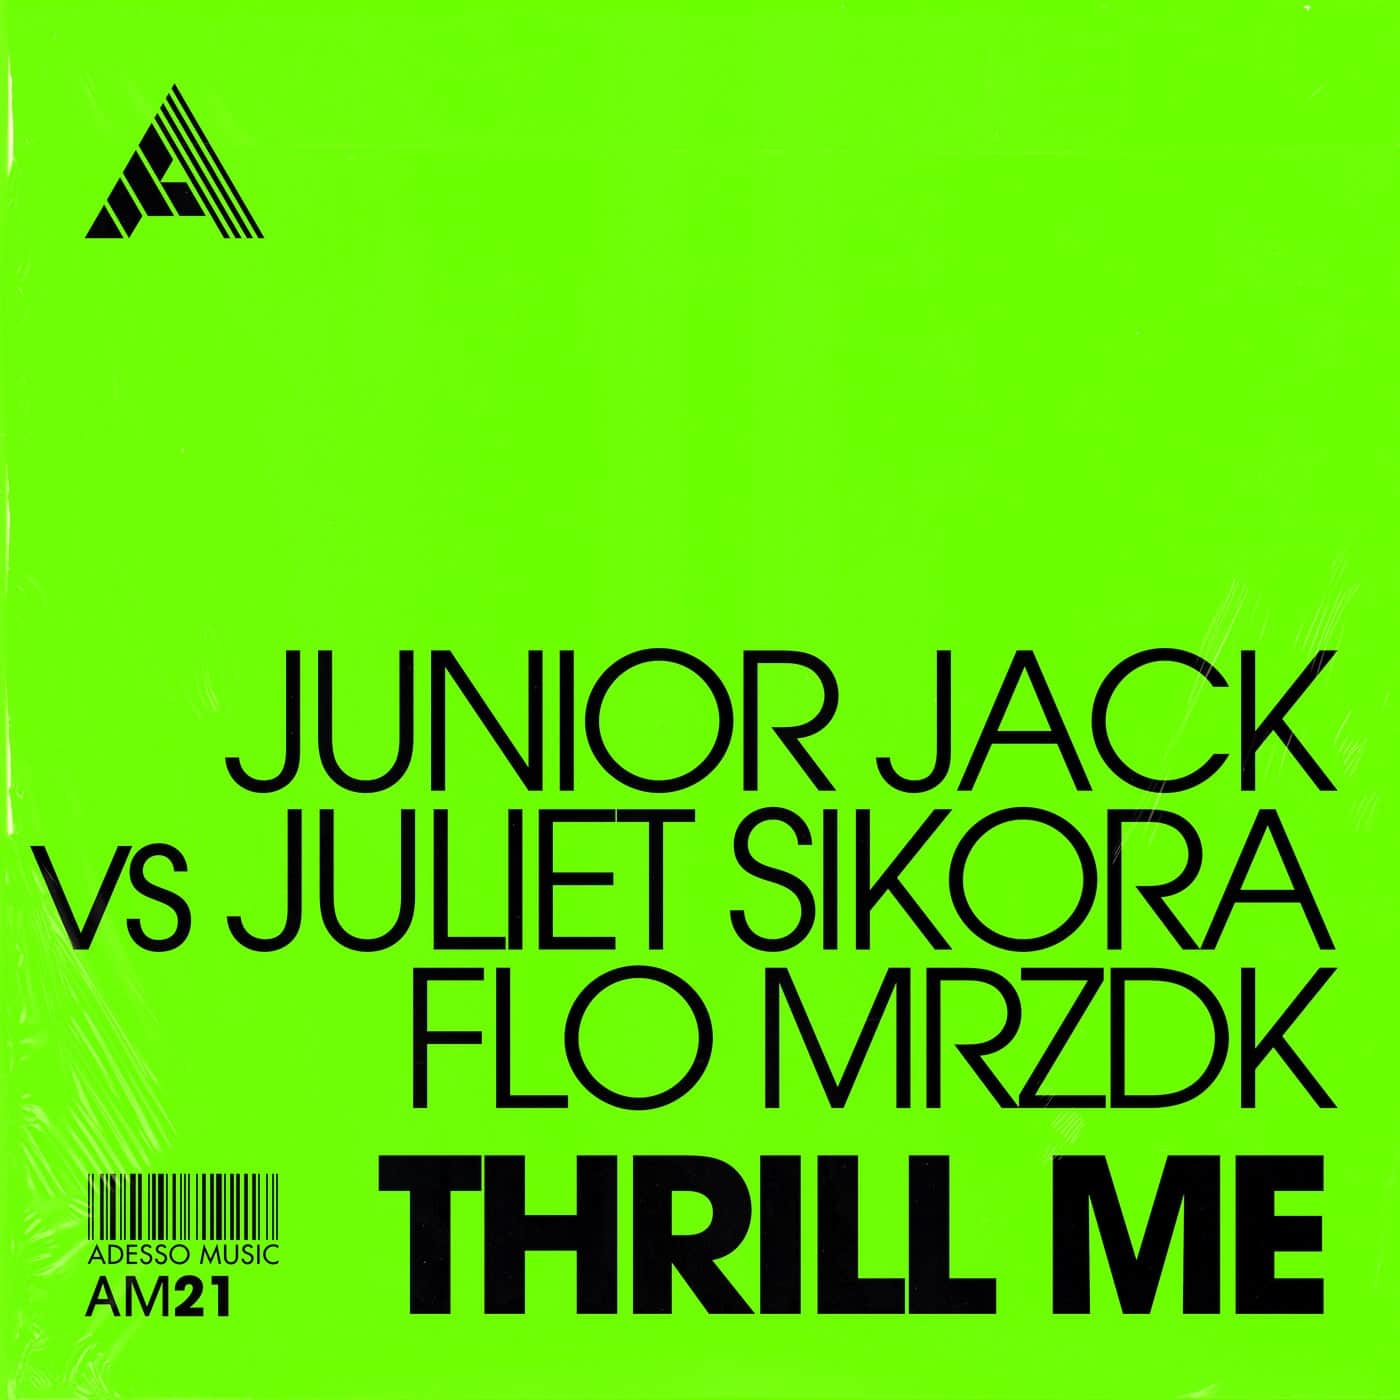 Download Junior Jack, Juliet Sikora, Flo MRZDK - Thrill Me - Extended Mix on Electrobuzz